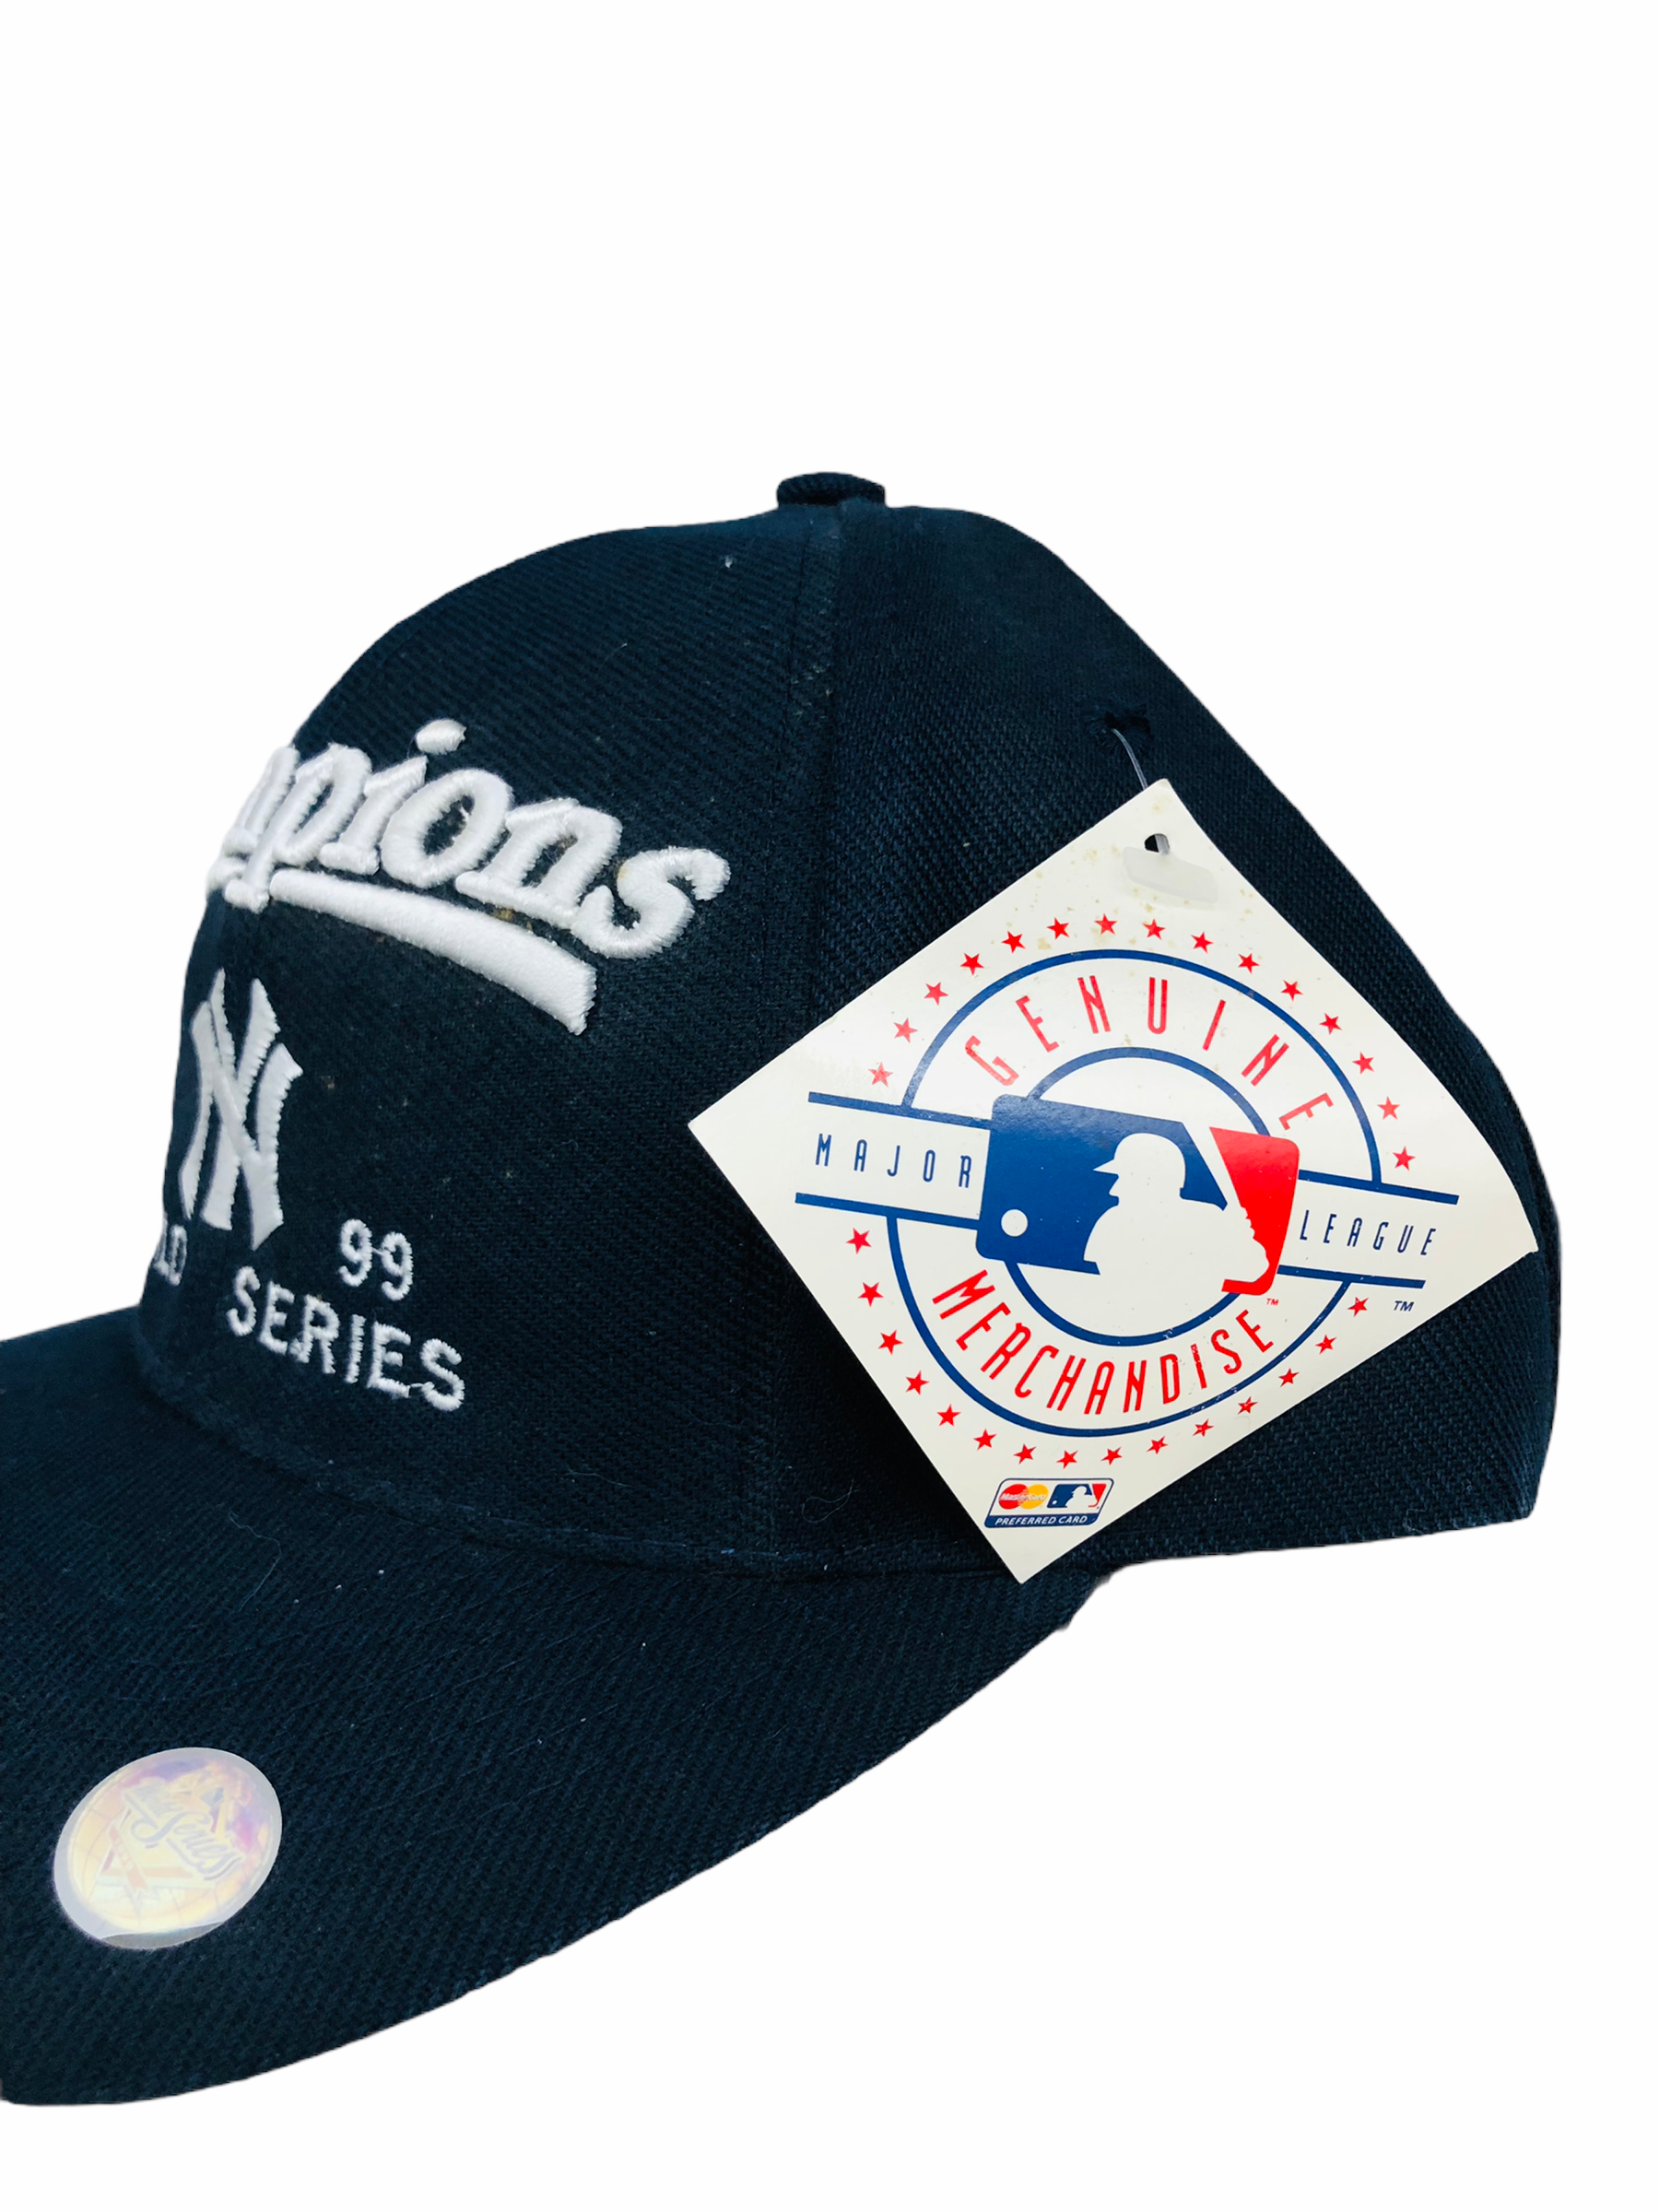 NEW YORK YANKEES VINTAGE 1999 WORLD SERIES CHAMPIONS SNAPBACK ADULT HA -  Bucks County Baseball Co.